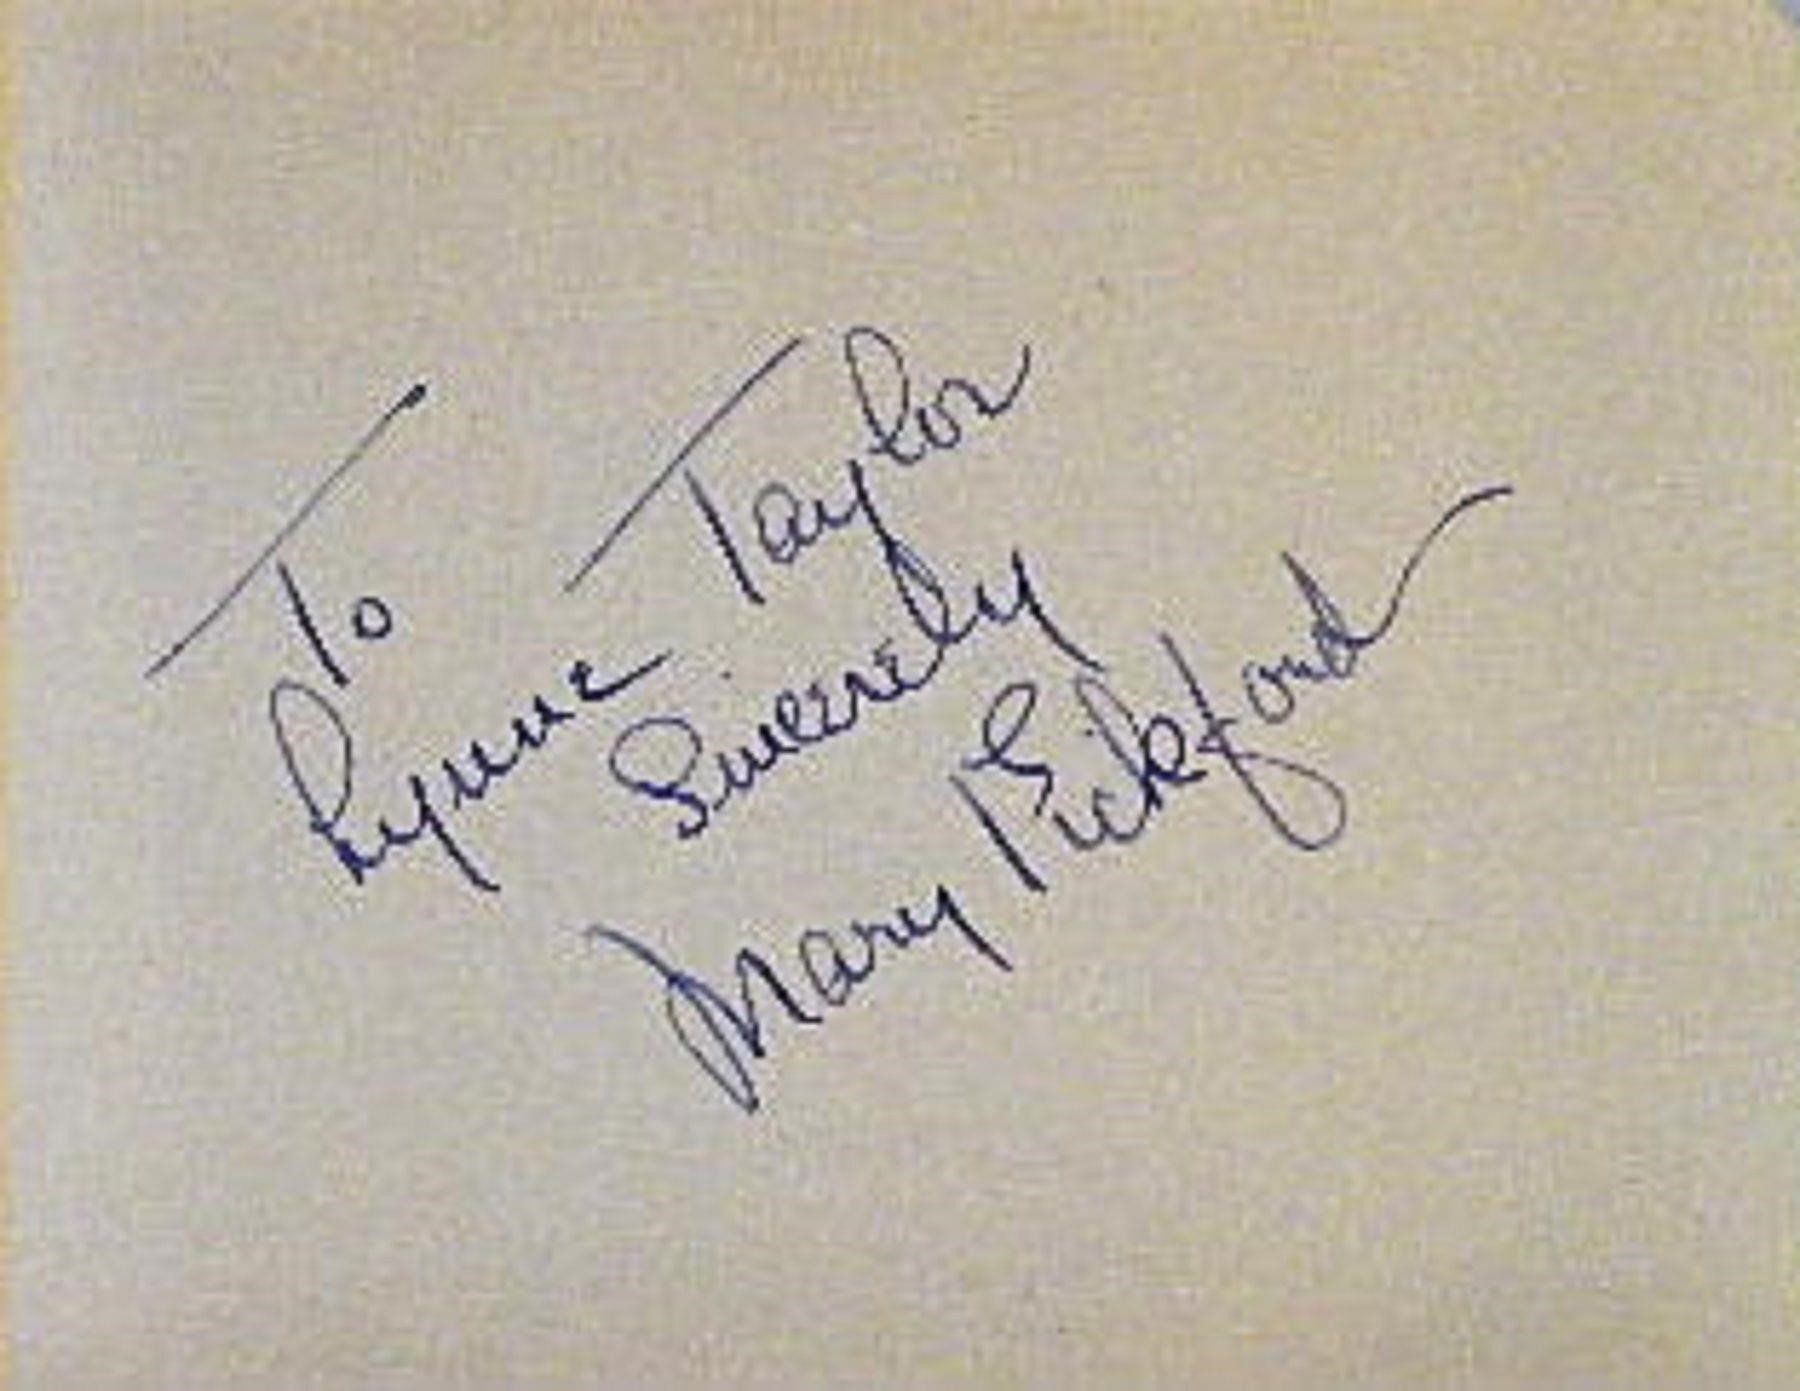 Mary Pickford signature slip